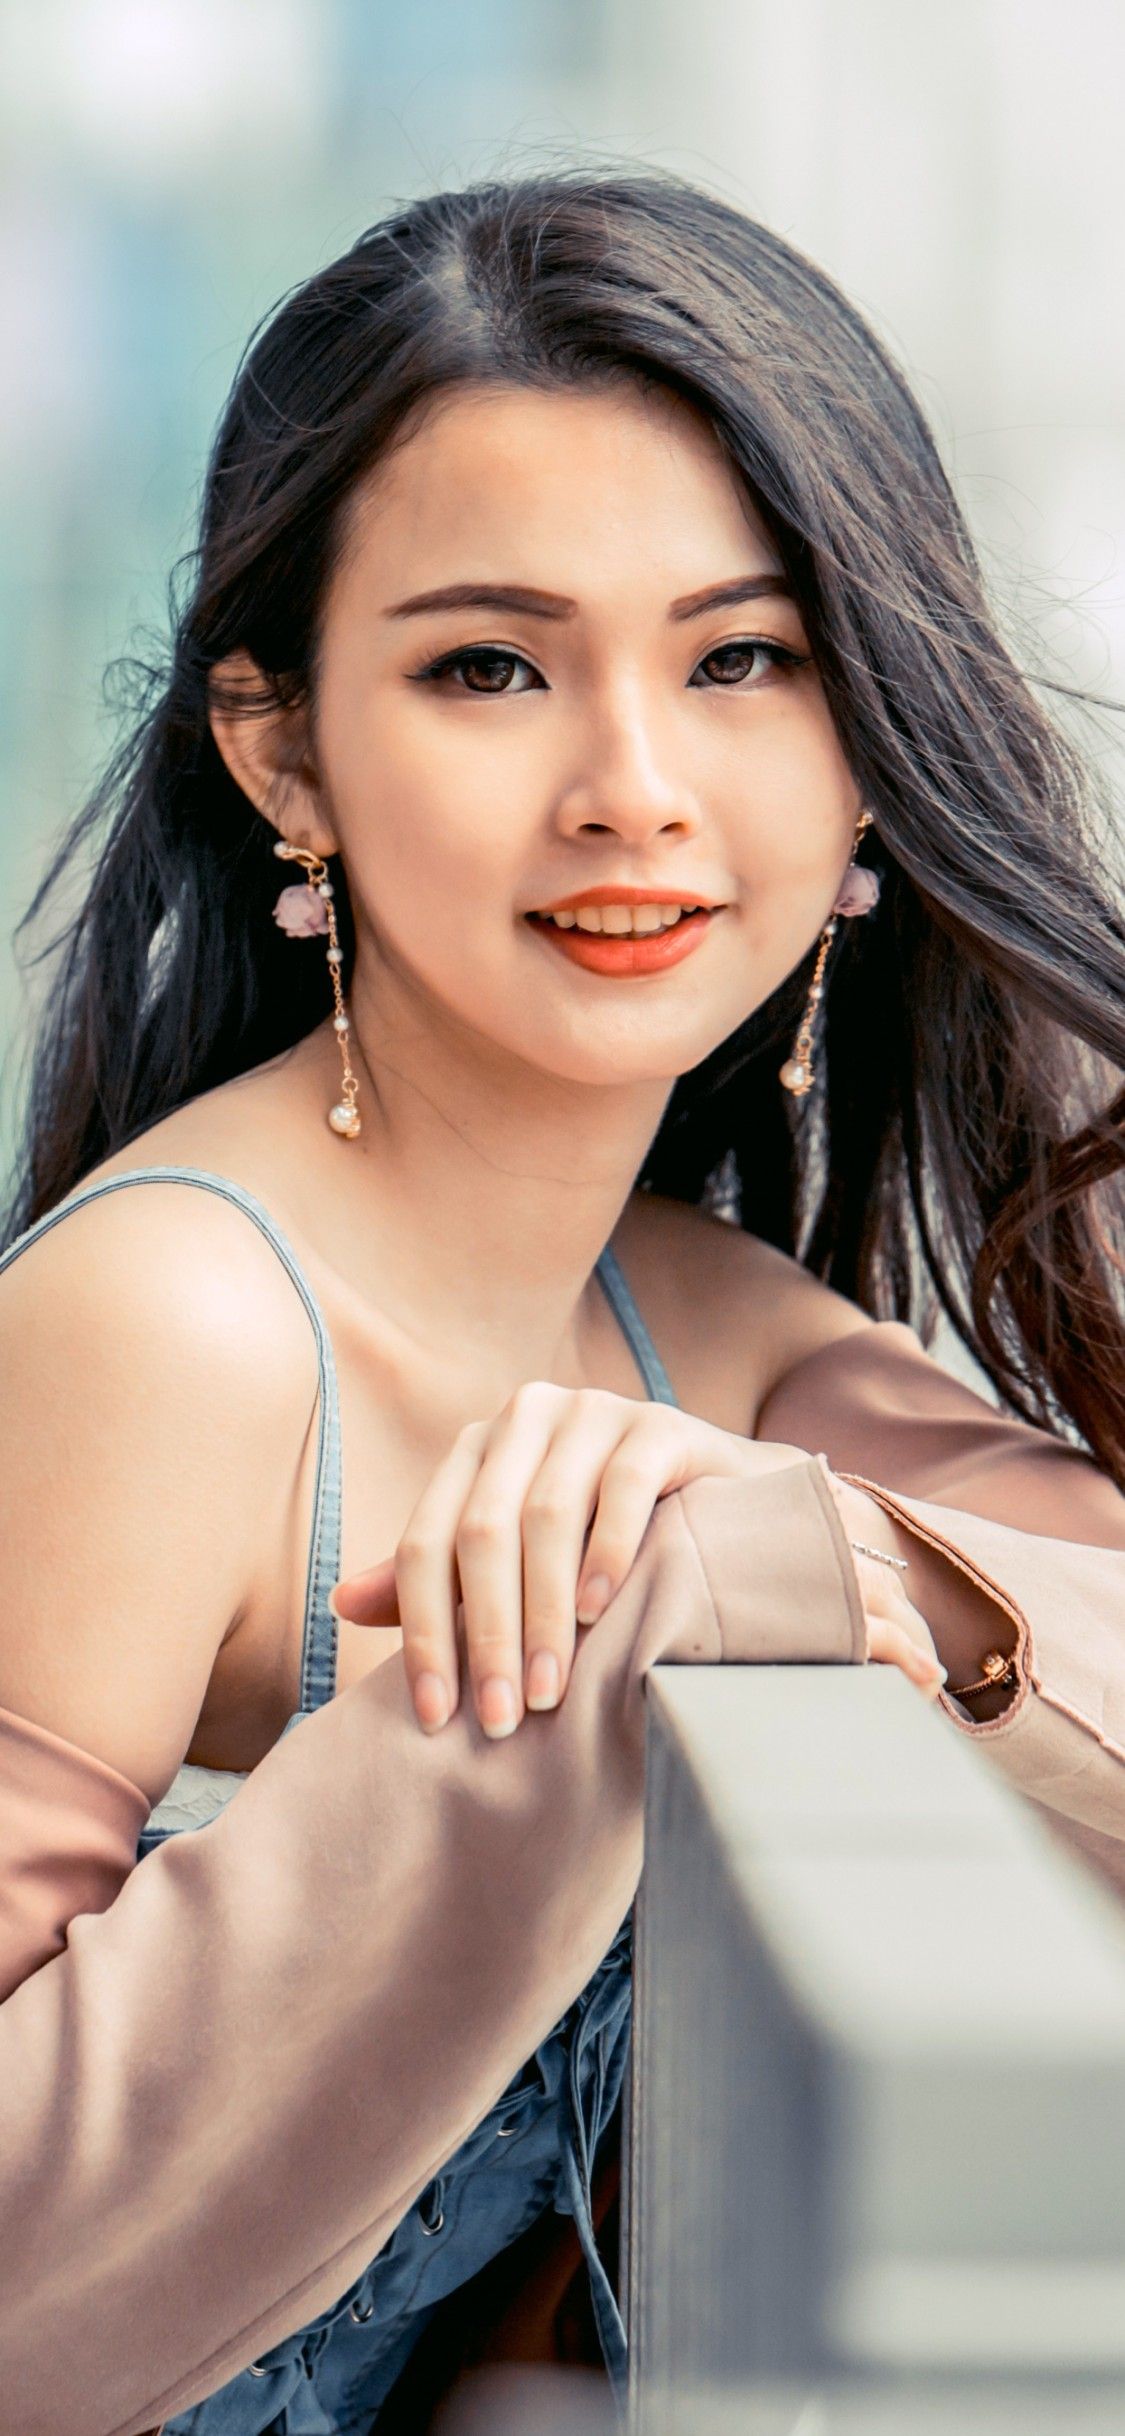 Asian Girl 4K Wallpaper, Beautiful girl, Asian Woman, Cute, 5K, People